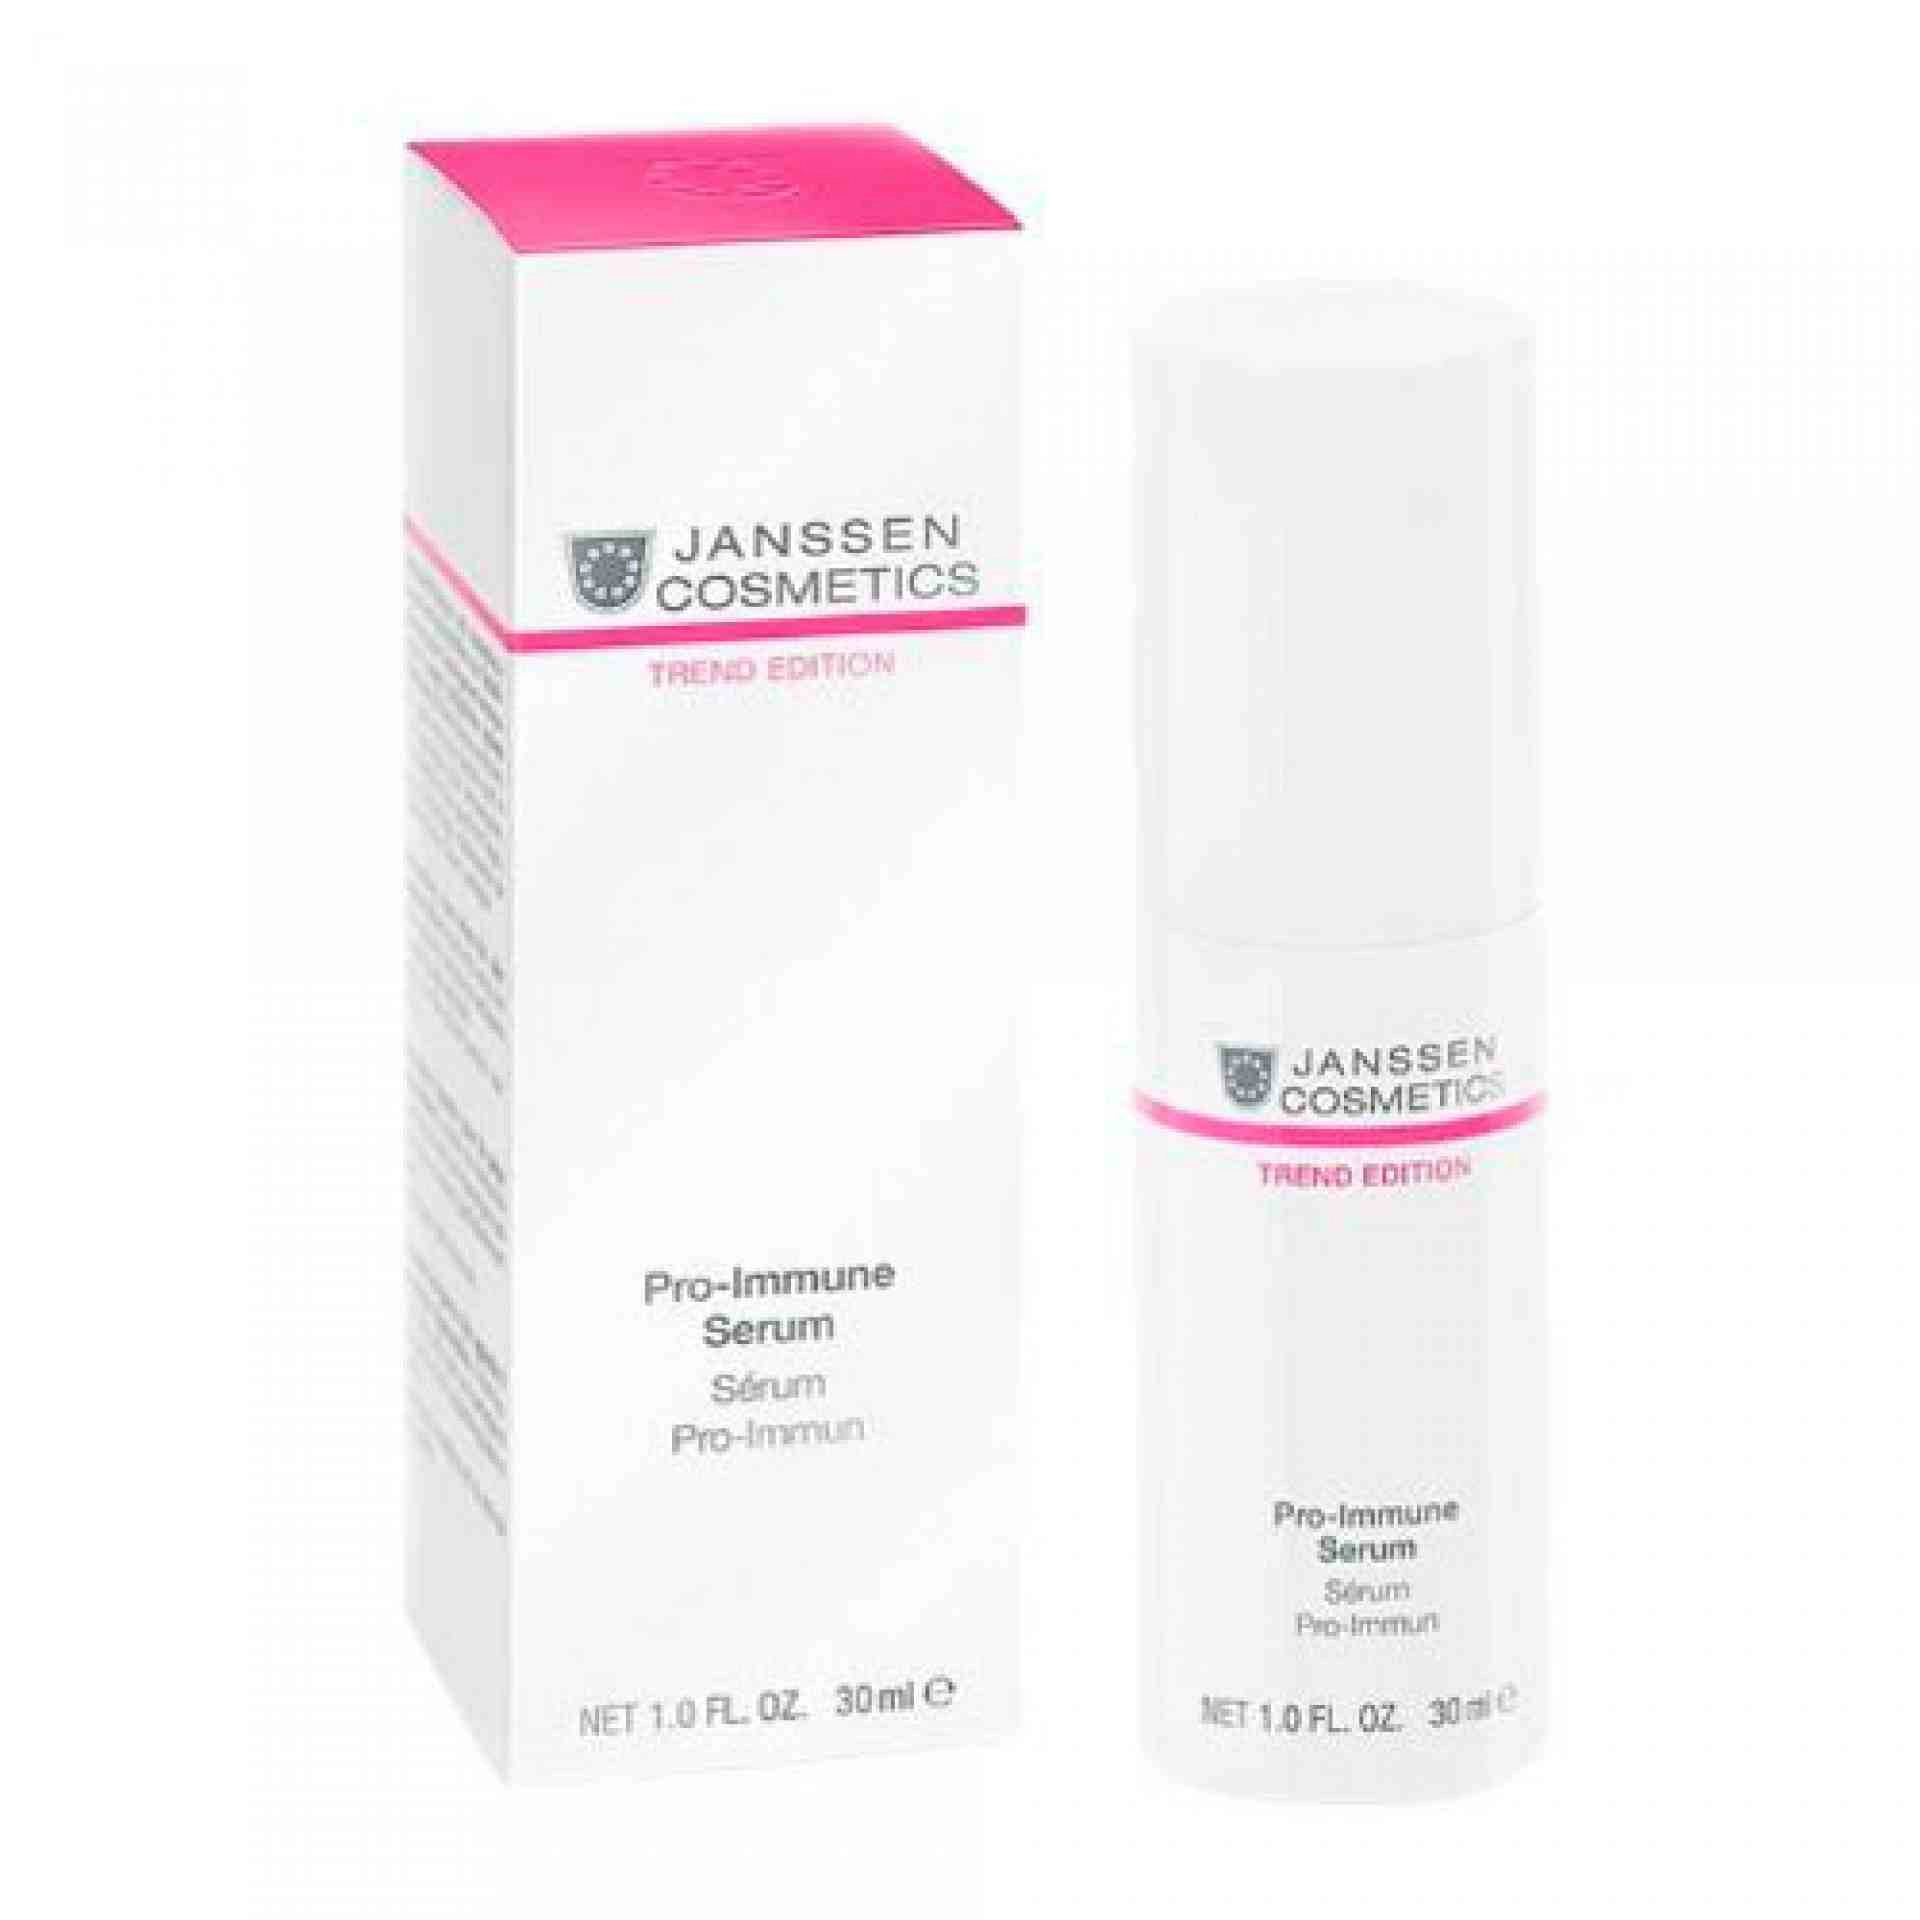 Sensitive Skin Pro-Immune Serum 30ml - Janssen Cosmetics ®